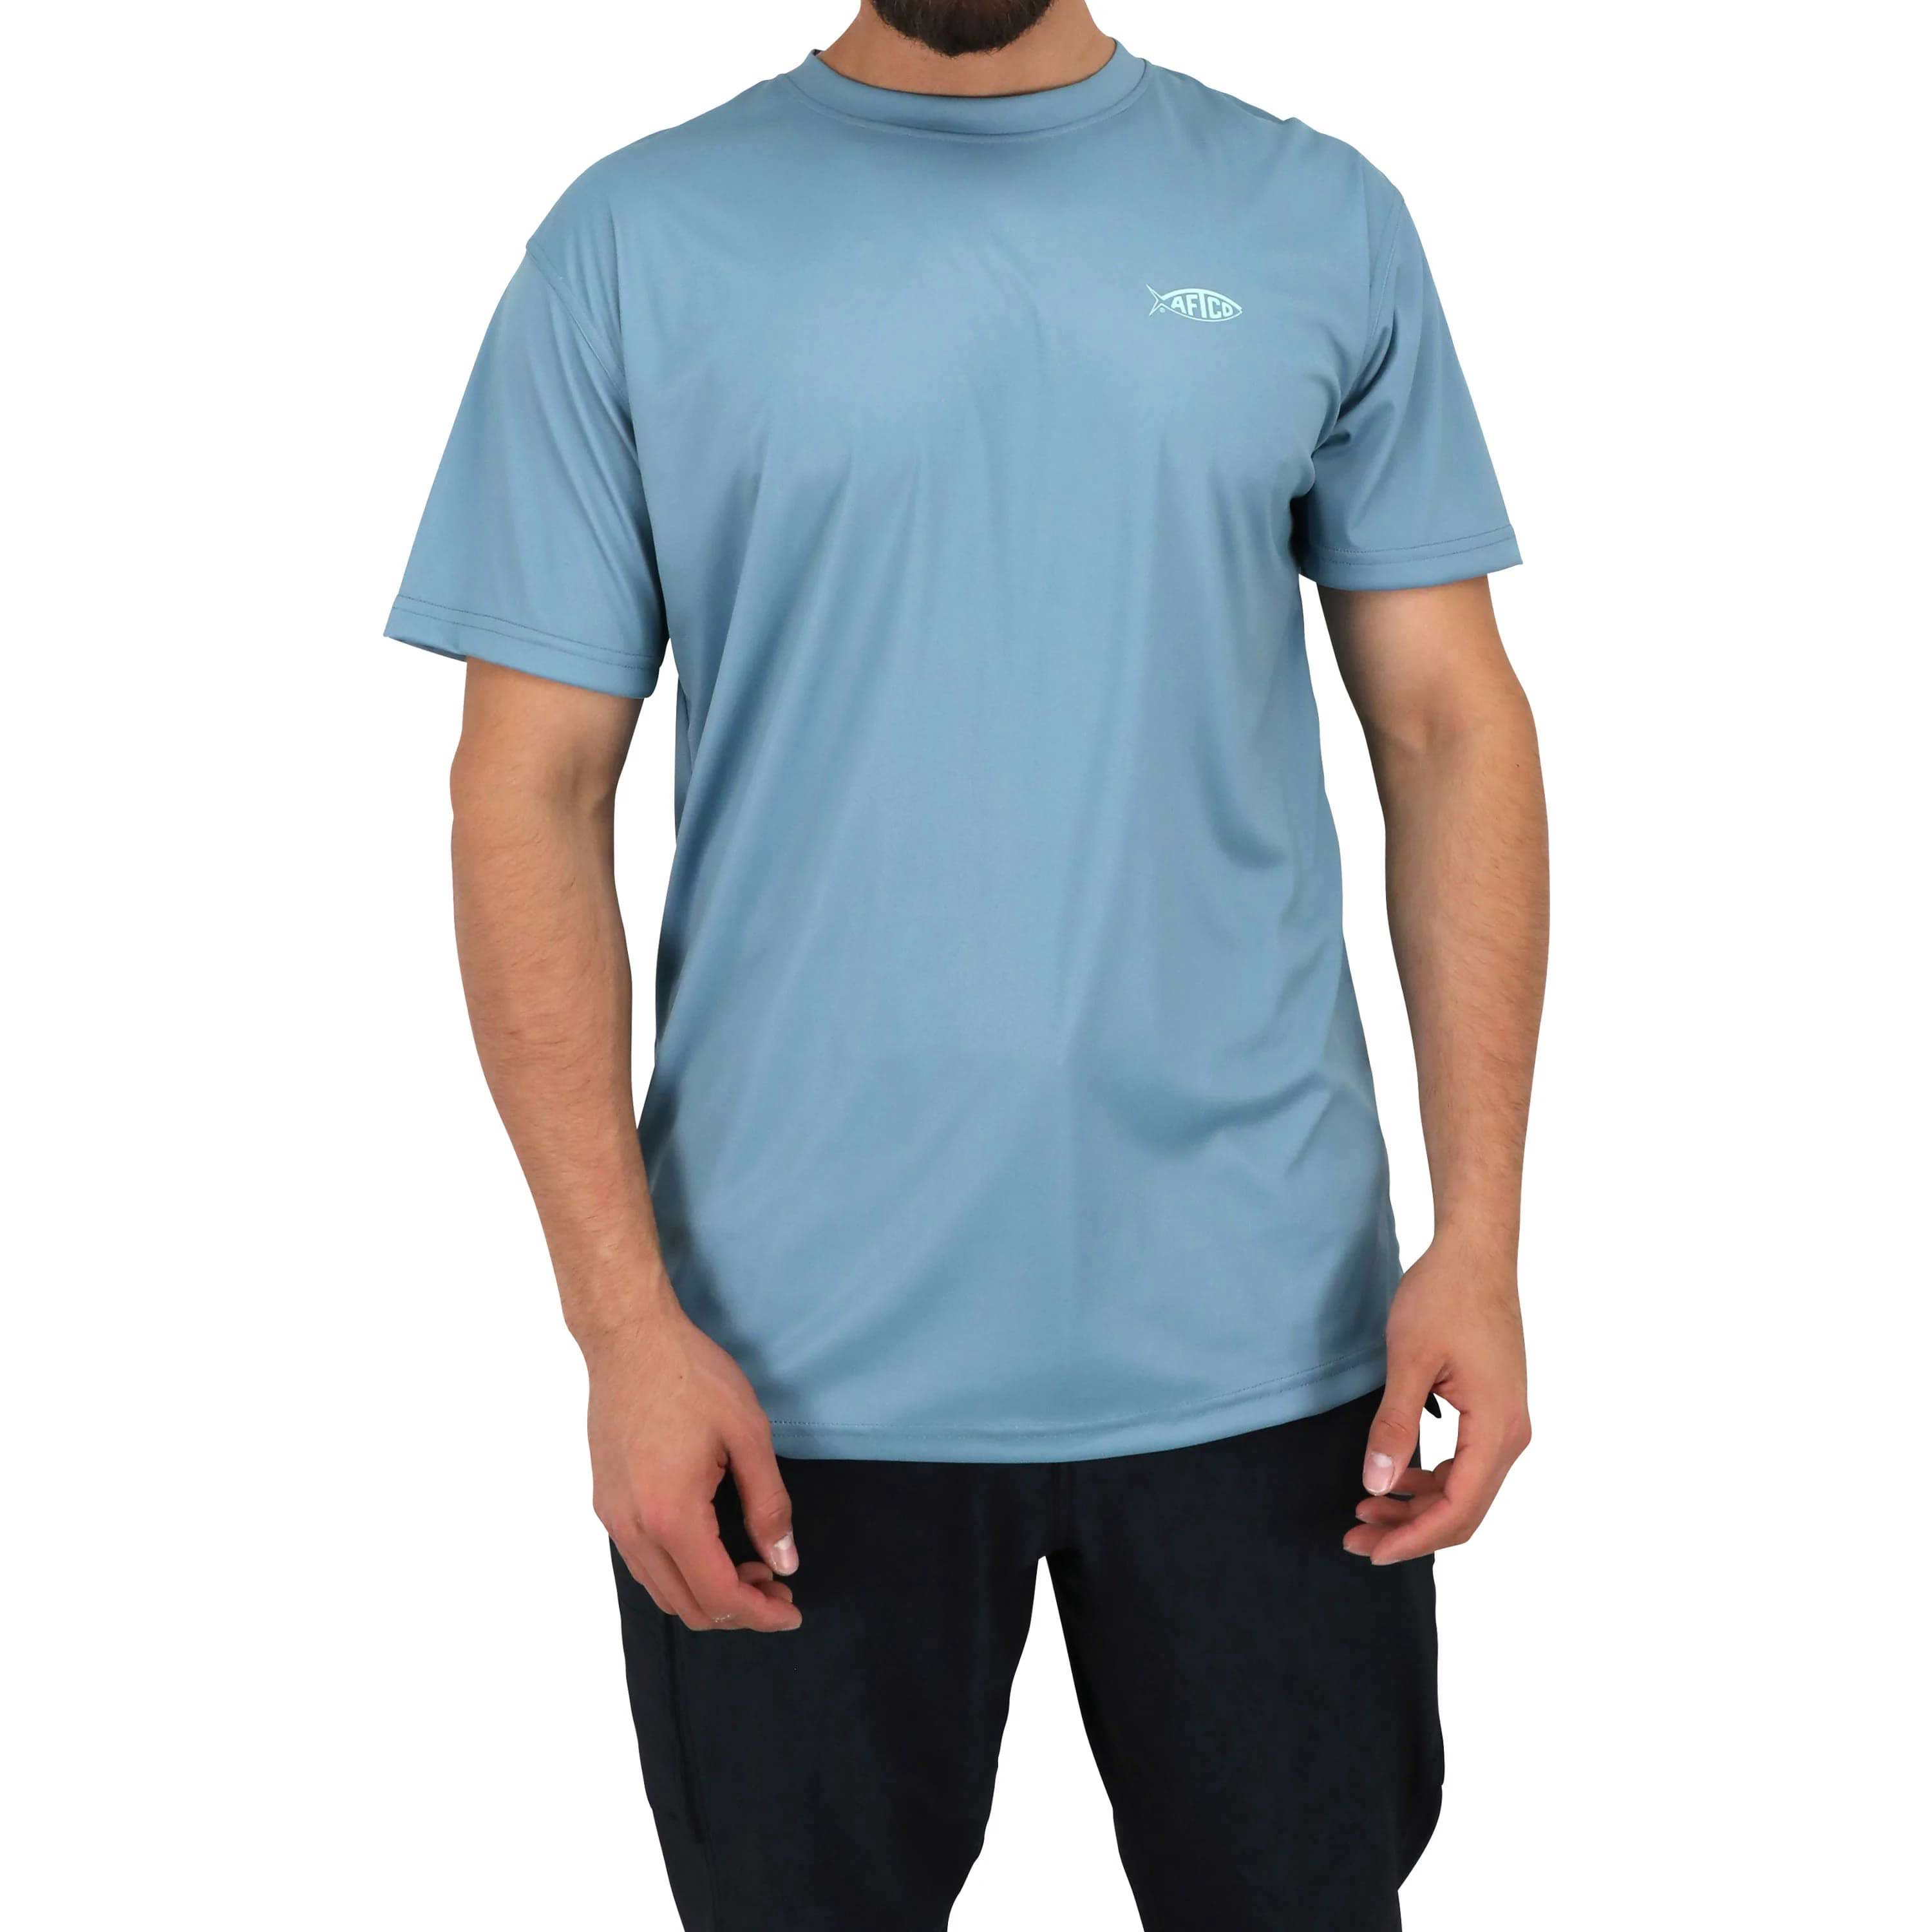 AFTCO Jigfish Performance T-Shirt - Lt. Grey - X-Large at